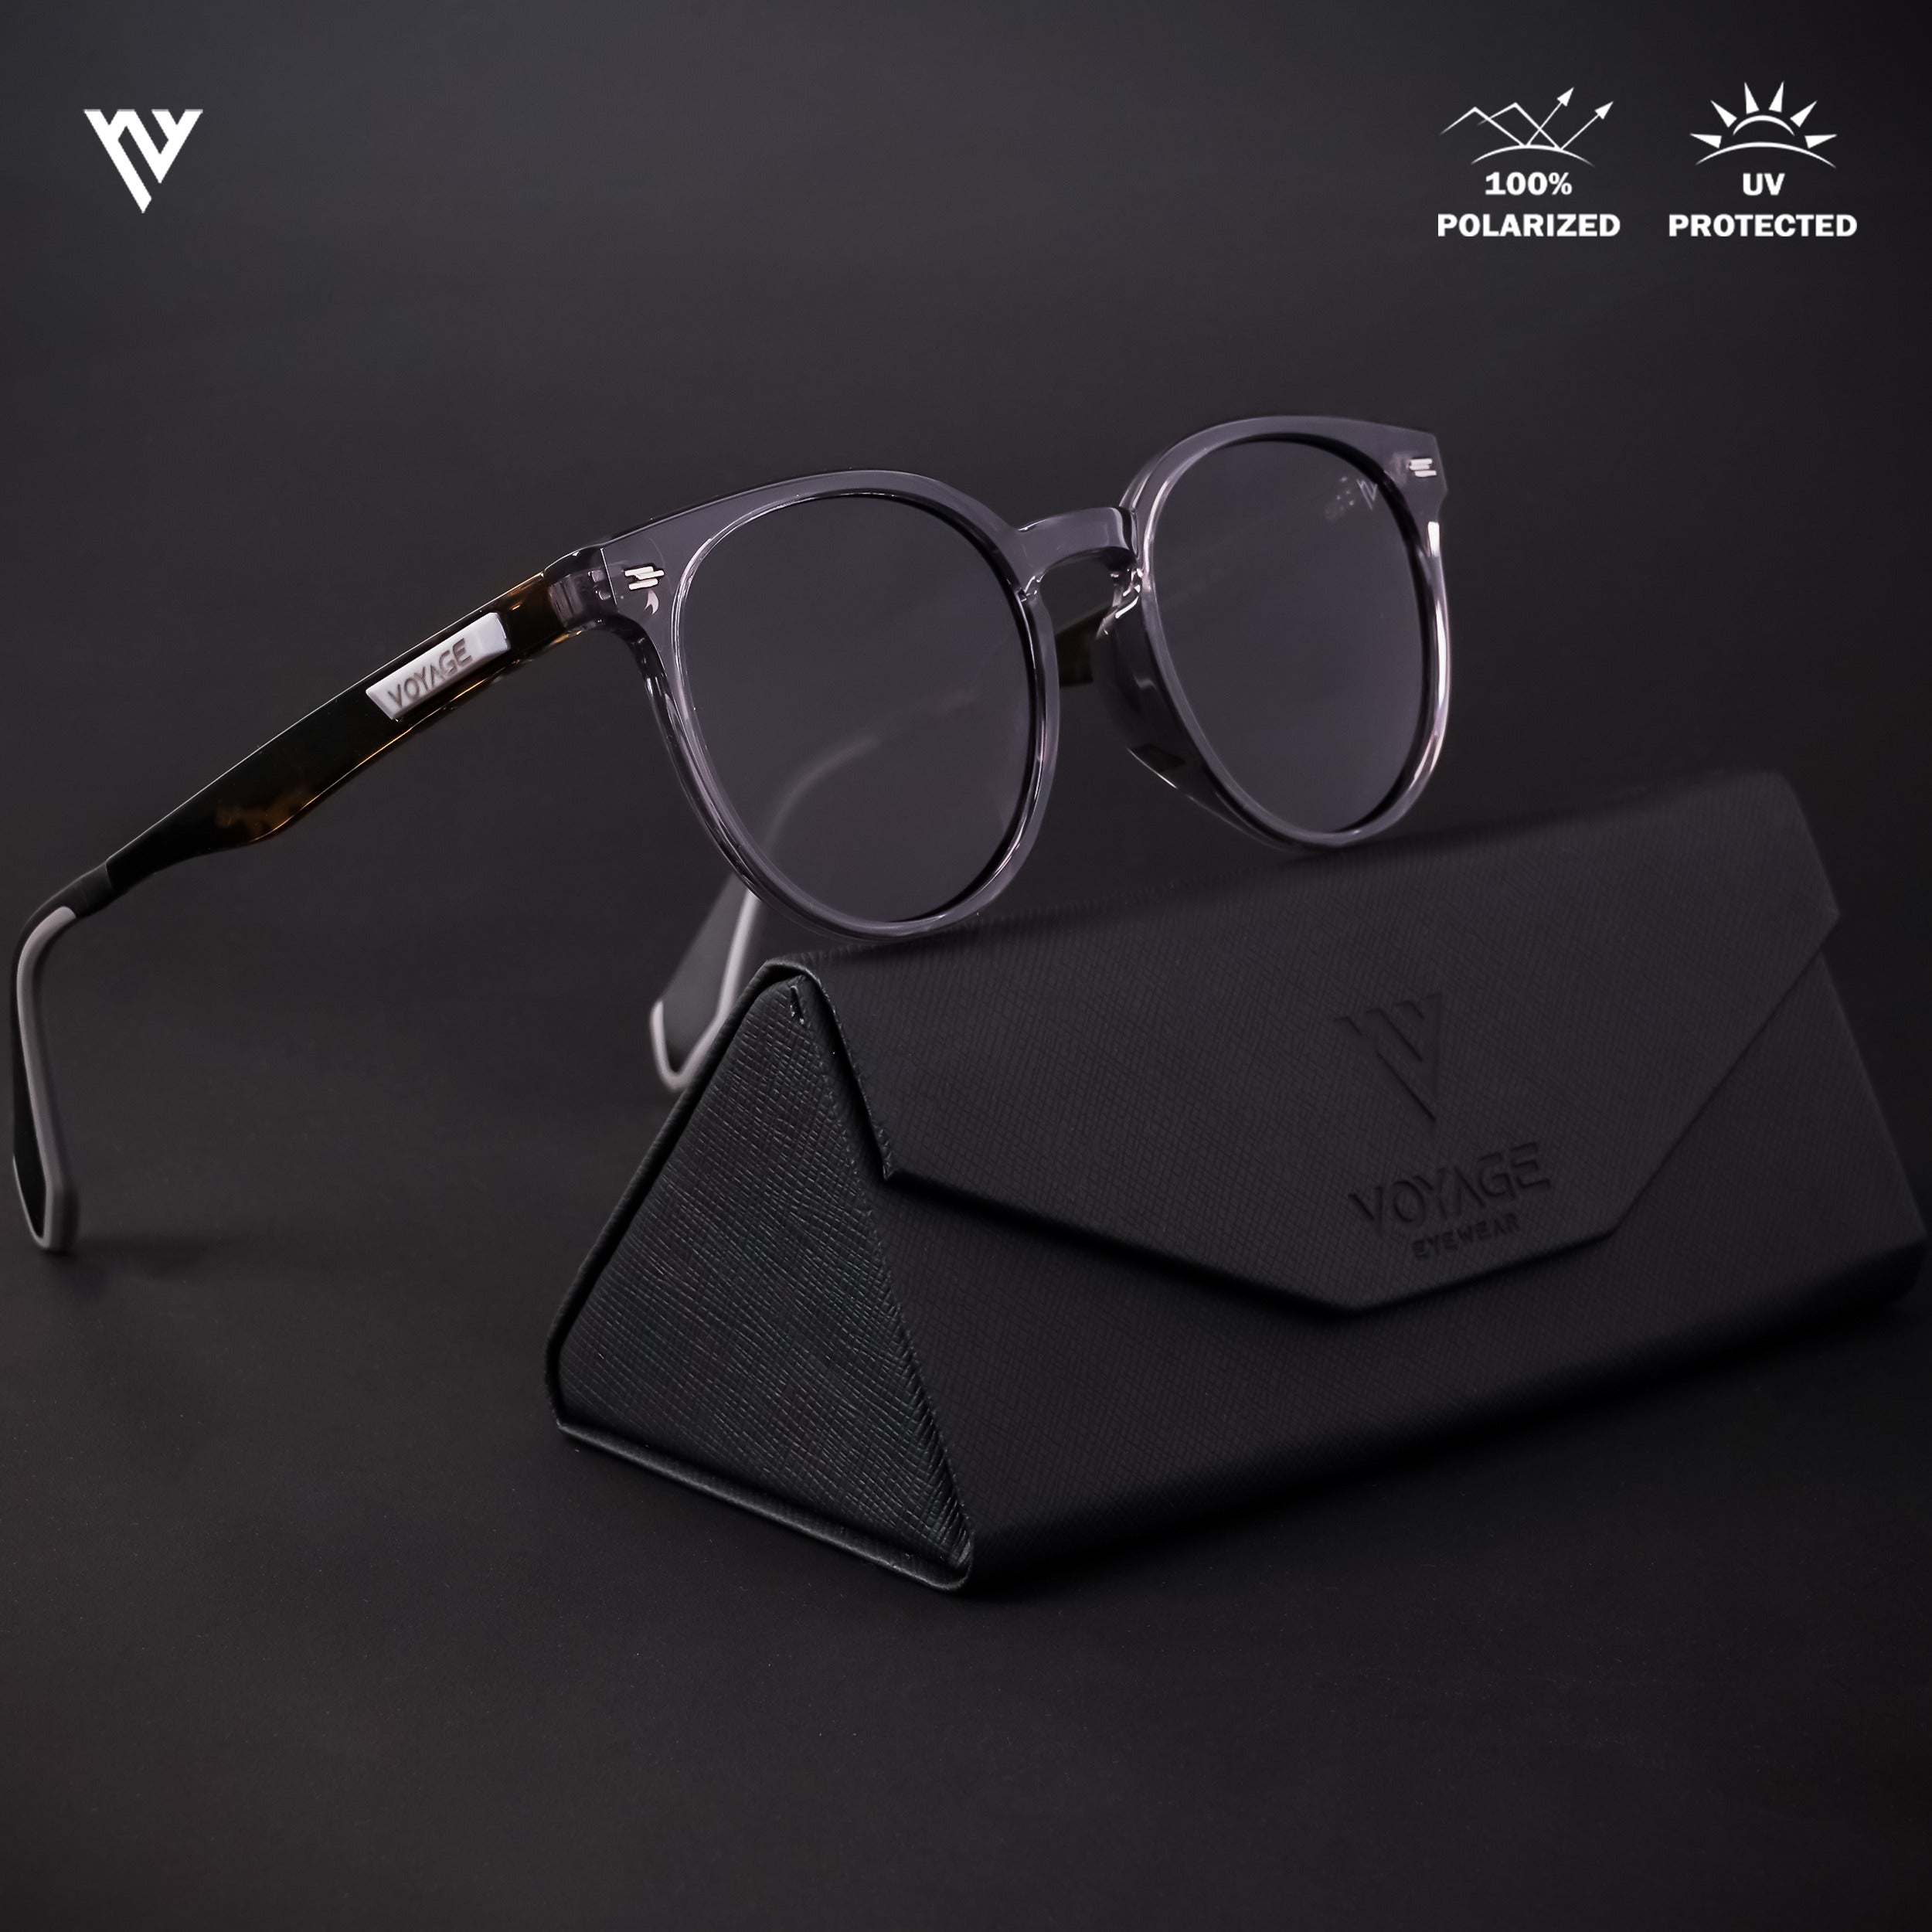 Voyage Active Grey Polarized Round Sunglasses for Men & Women - PMG4472